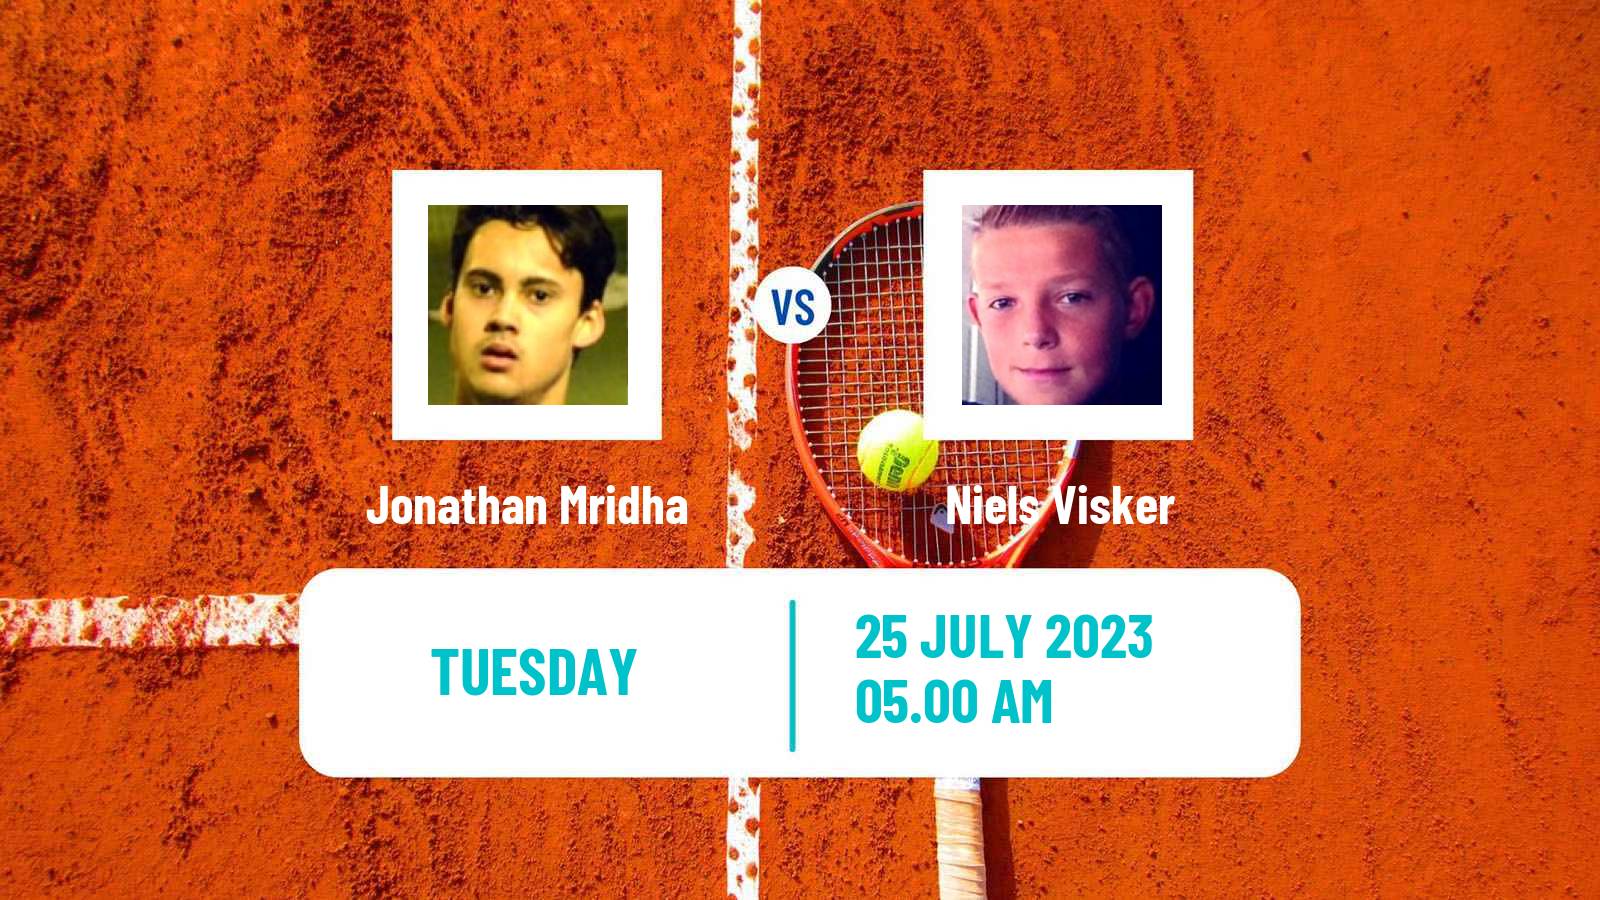 Tennis ITF M15 Vejle Men Jonathan Mridha - Niels Visker